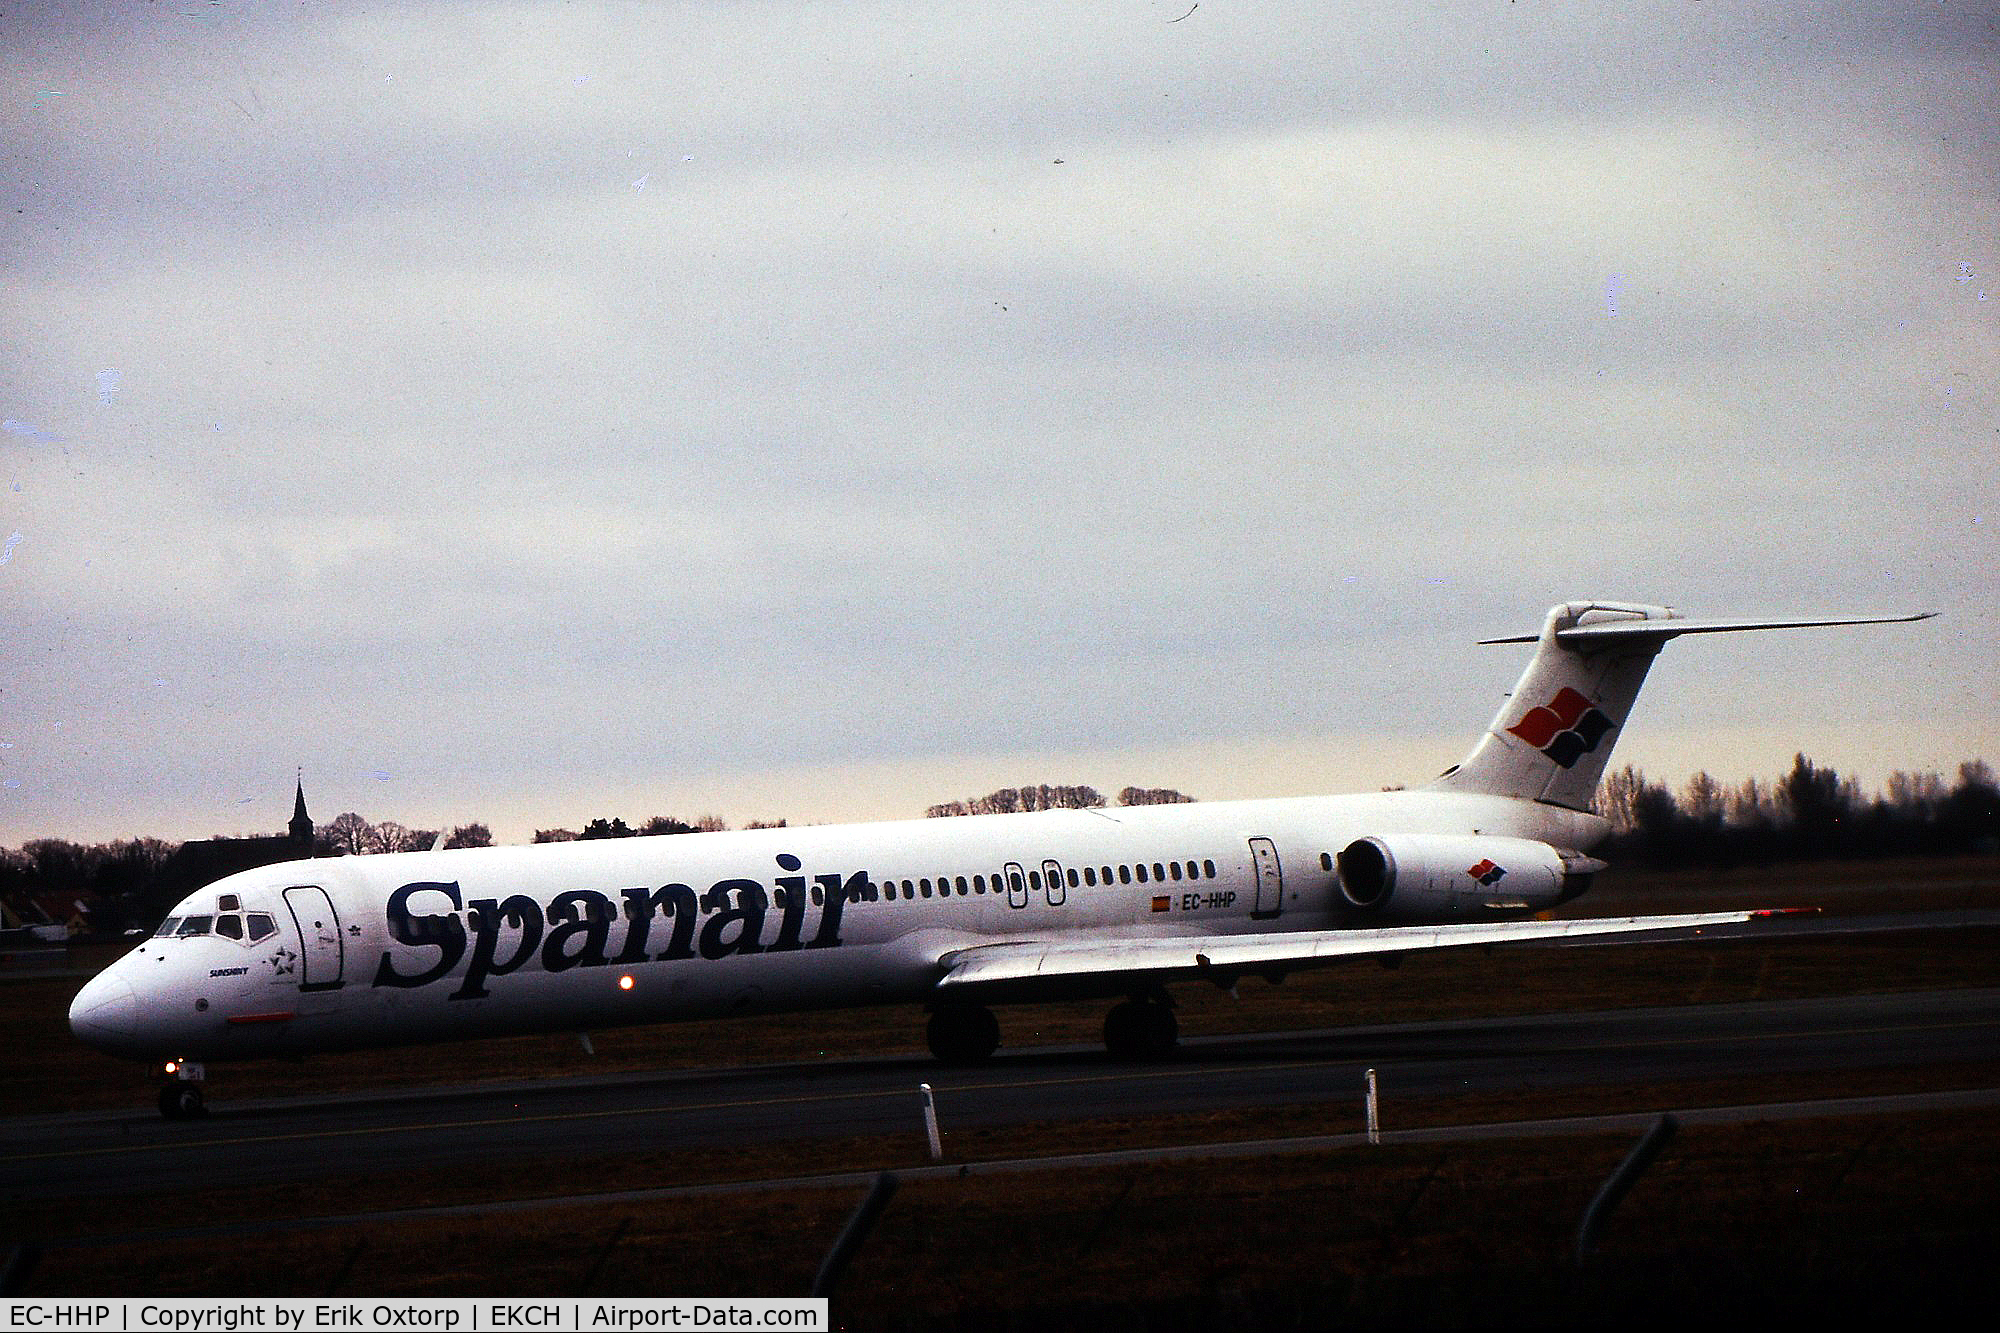 EC-HHP, 1987 McDonnell Douglas MD-82 (DC-9-82) C/N 49501, EC-HHP landed rw 04L